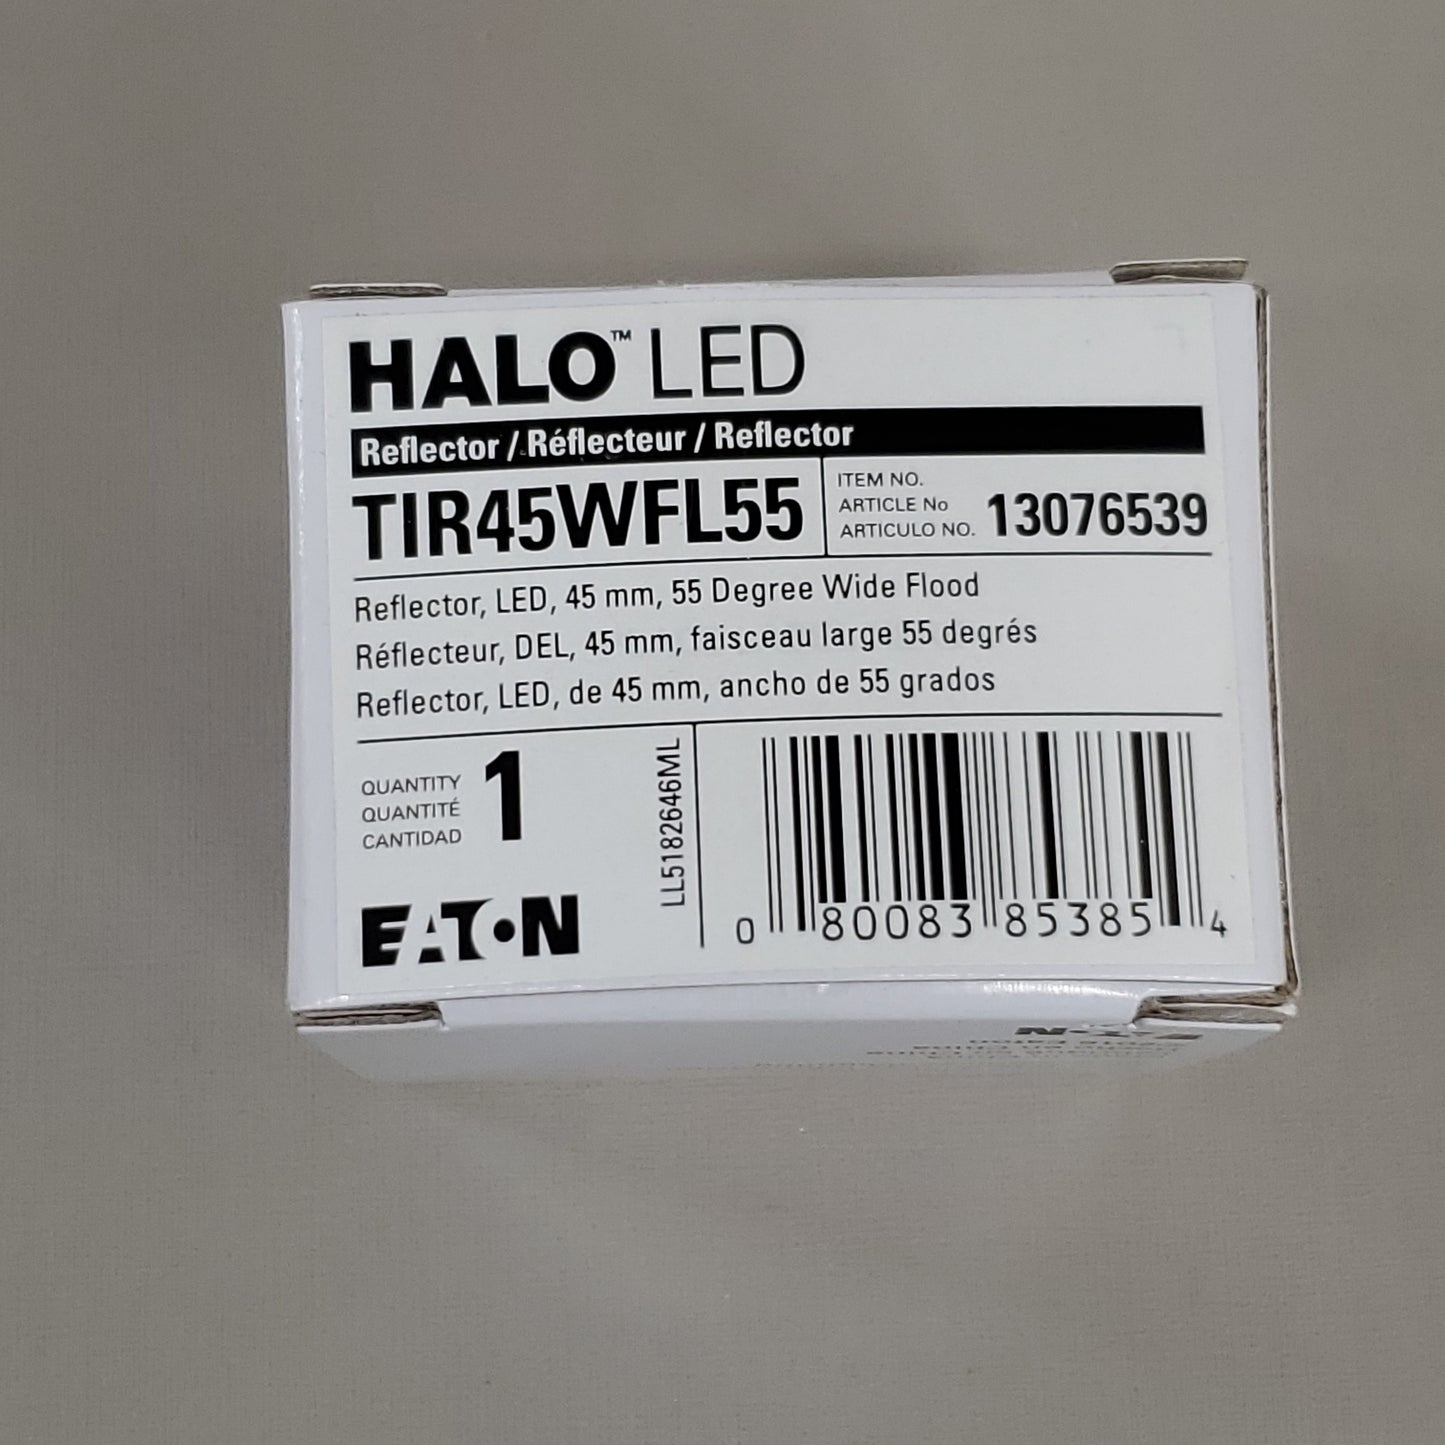 EATON HALO LIGHTING 12PK of LED Reflectors Black TIR45WFS55 (New)